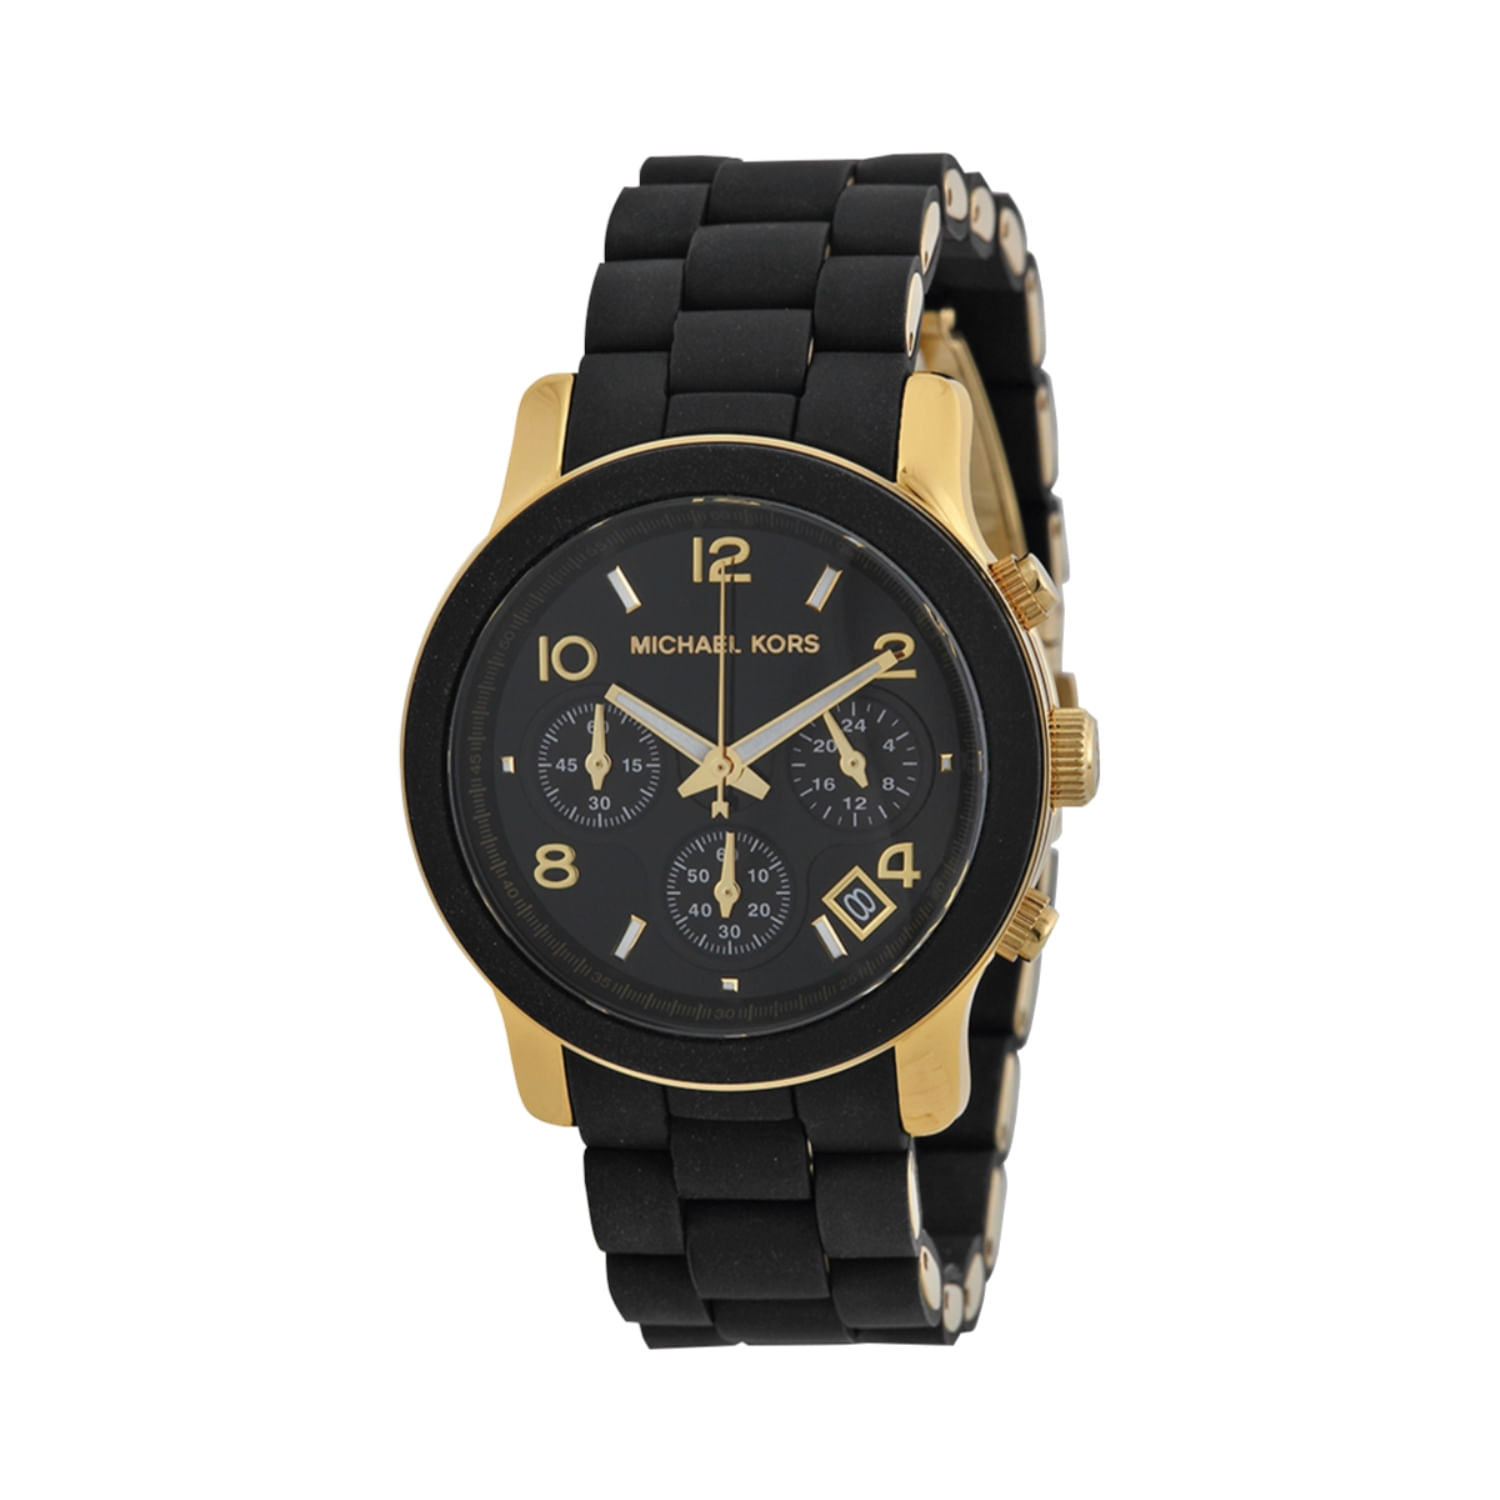 Reloj Michael Kors MK5191 Black and Gold Nuevo para Dama